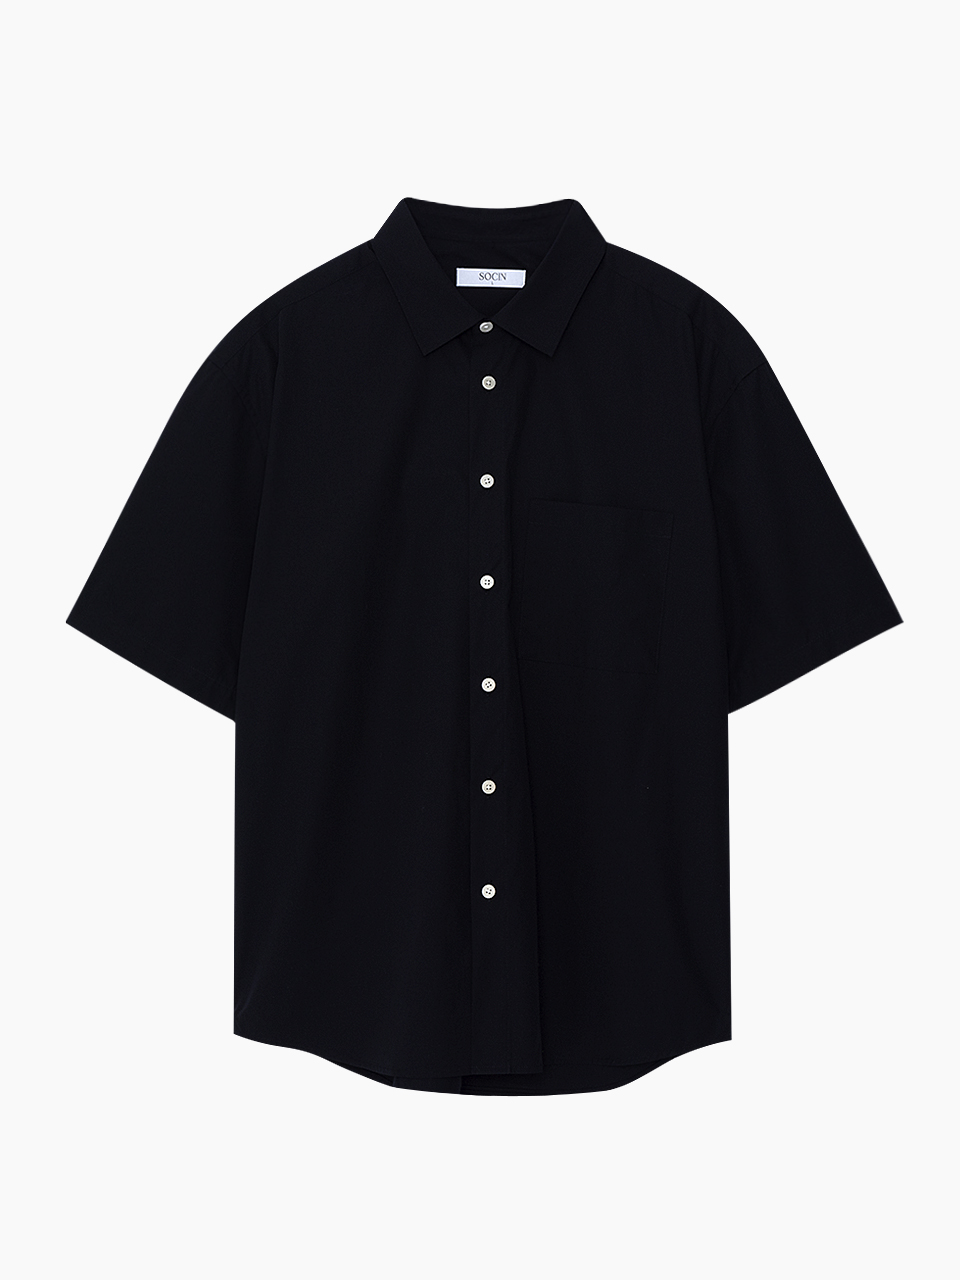 Premium Cotton urban half shirt (Black)